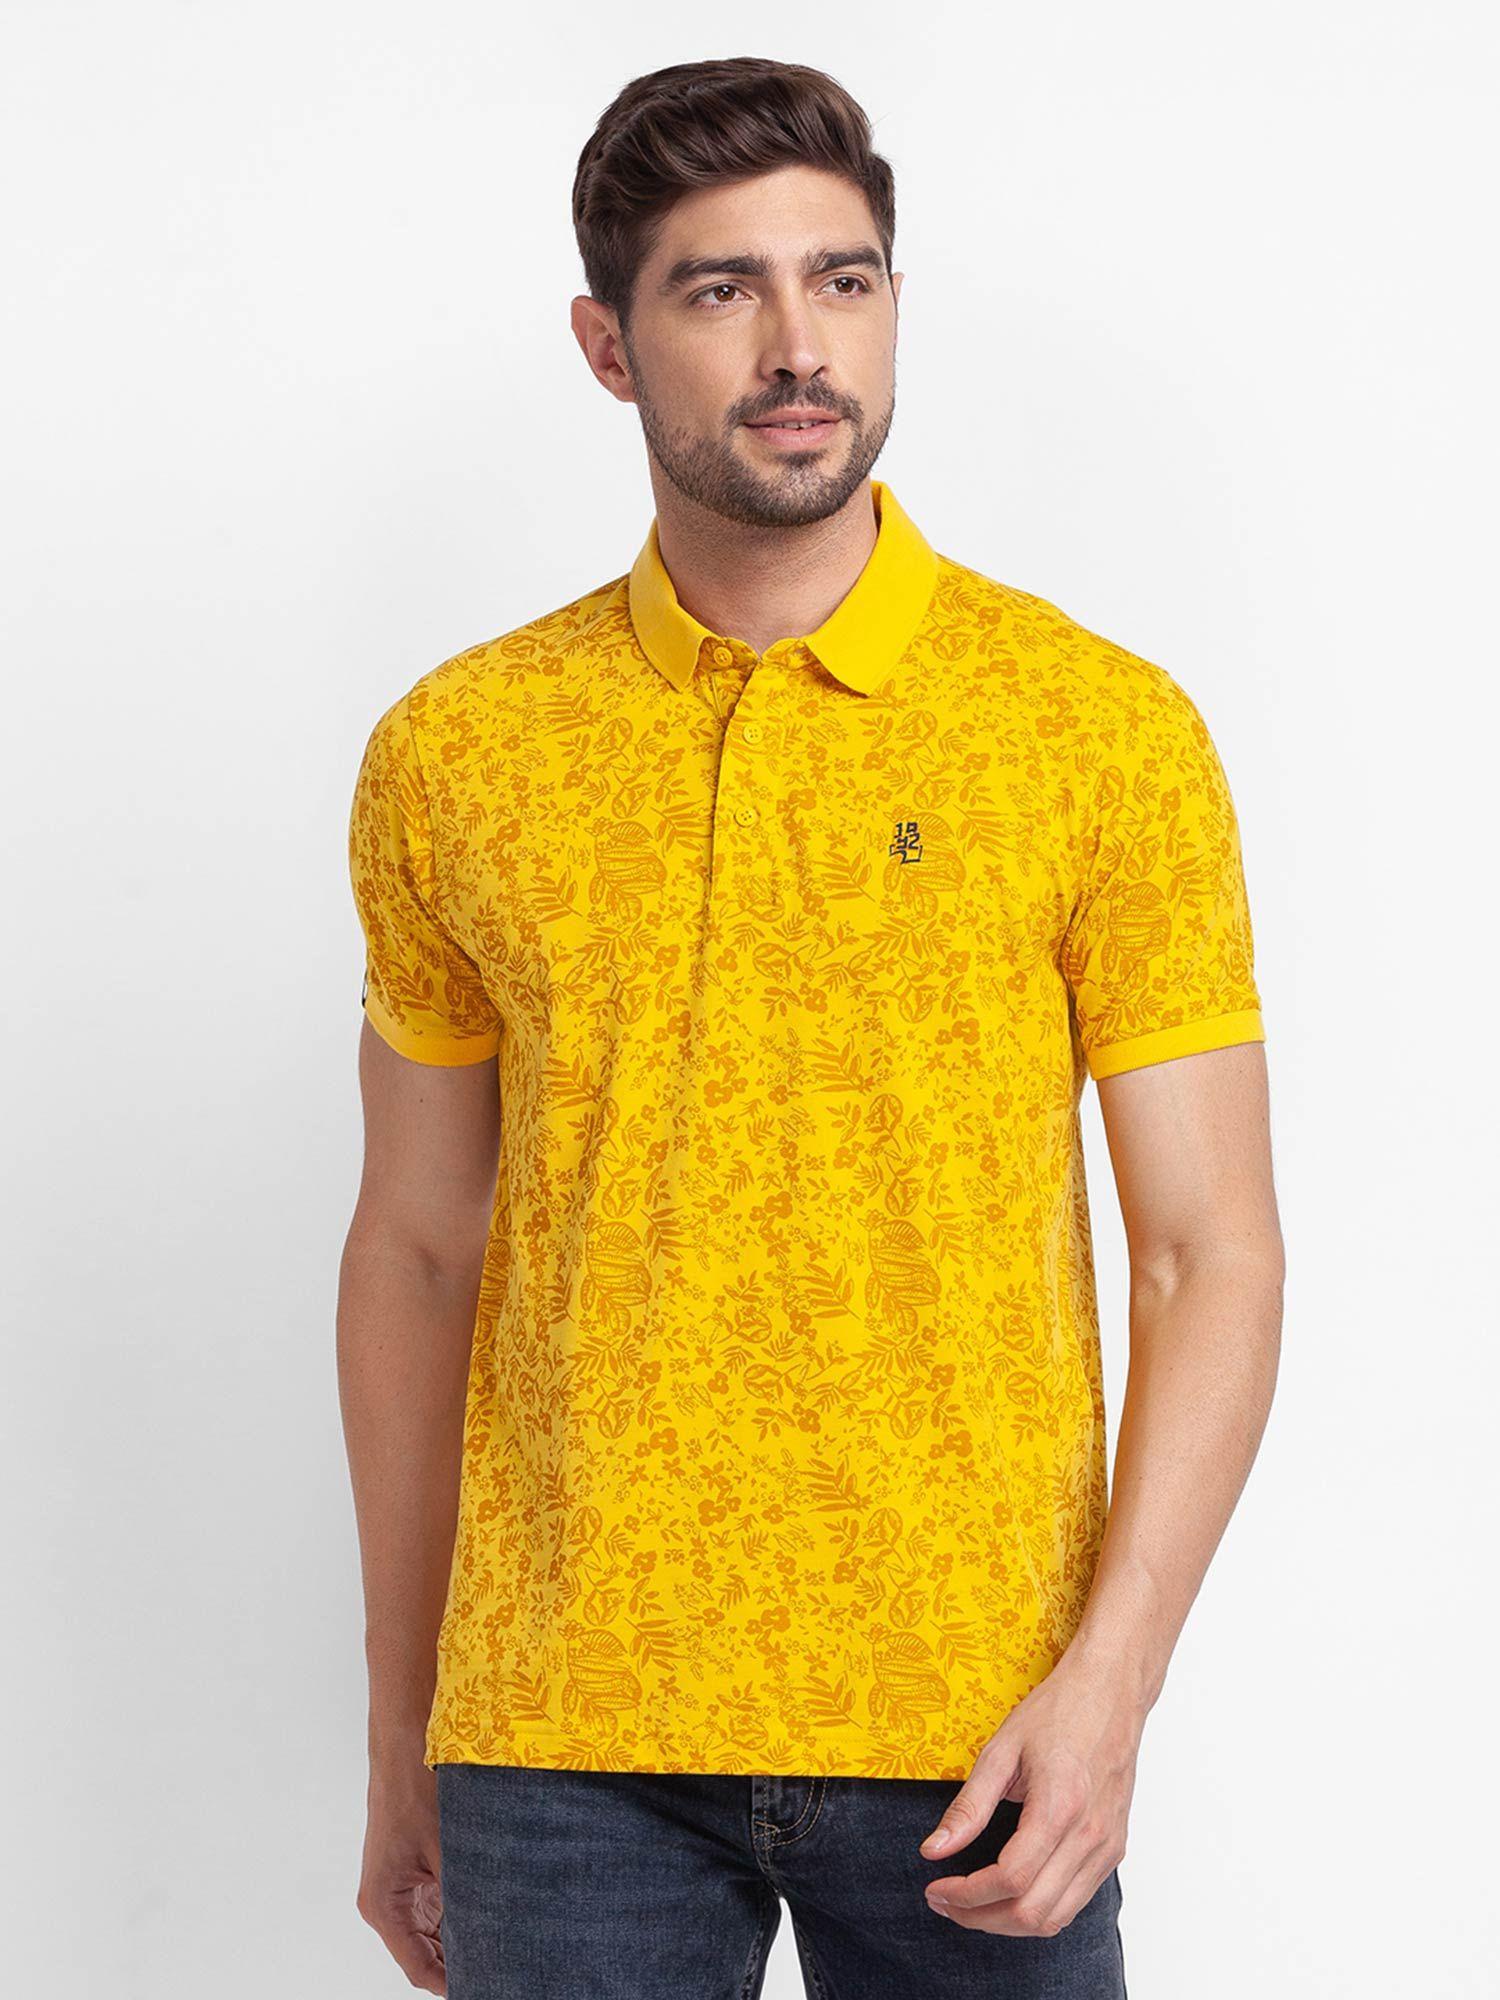 sulphur yellow cotton half sleeve printed casual polo t-shirt for men